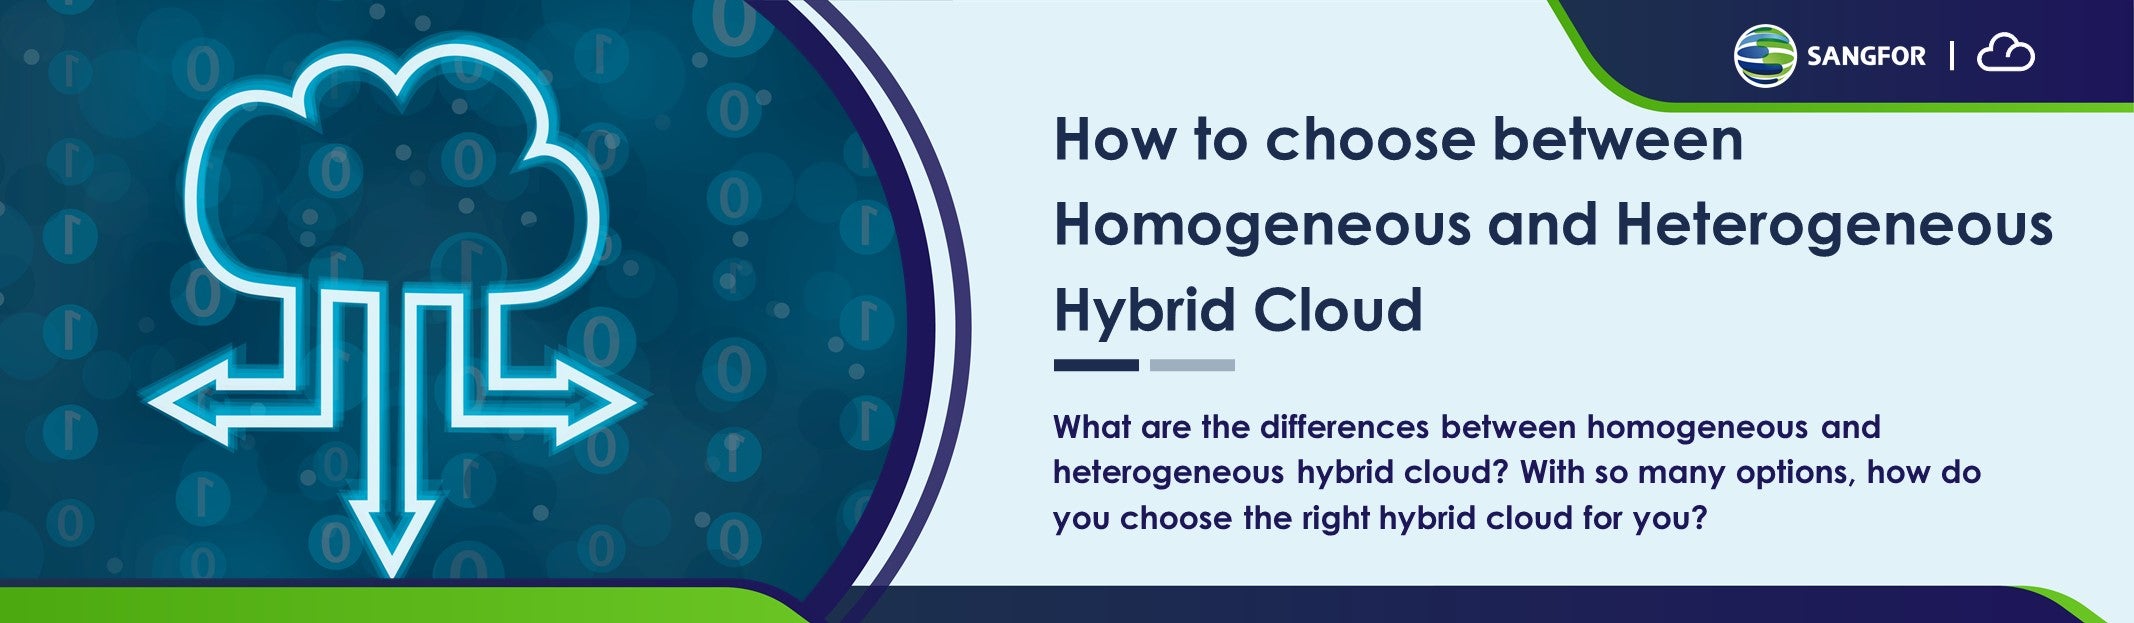 Homogeneous And Heterogeneous Hybrid Cloud